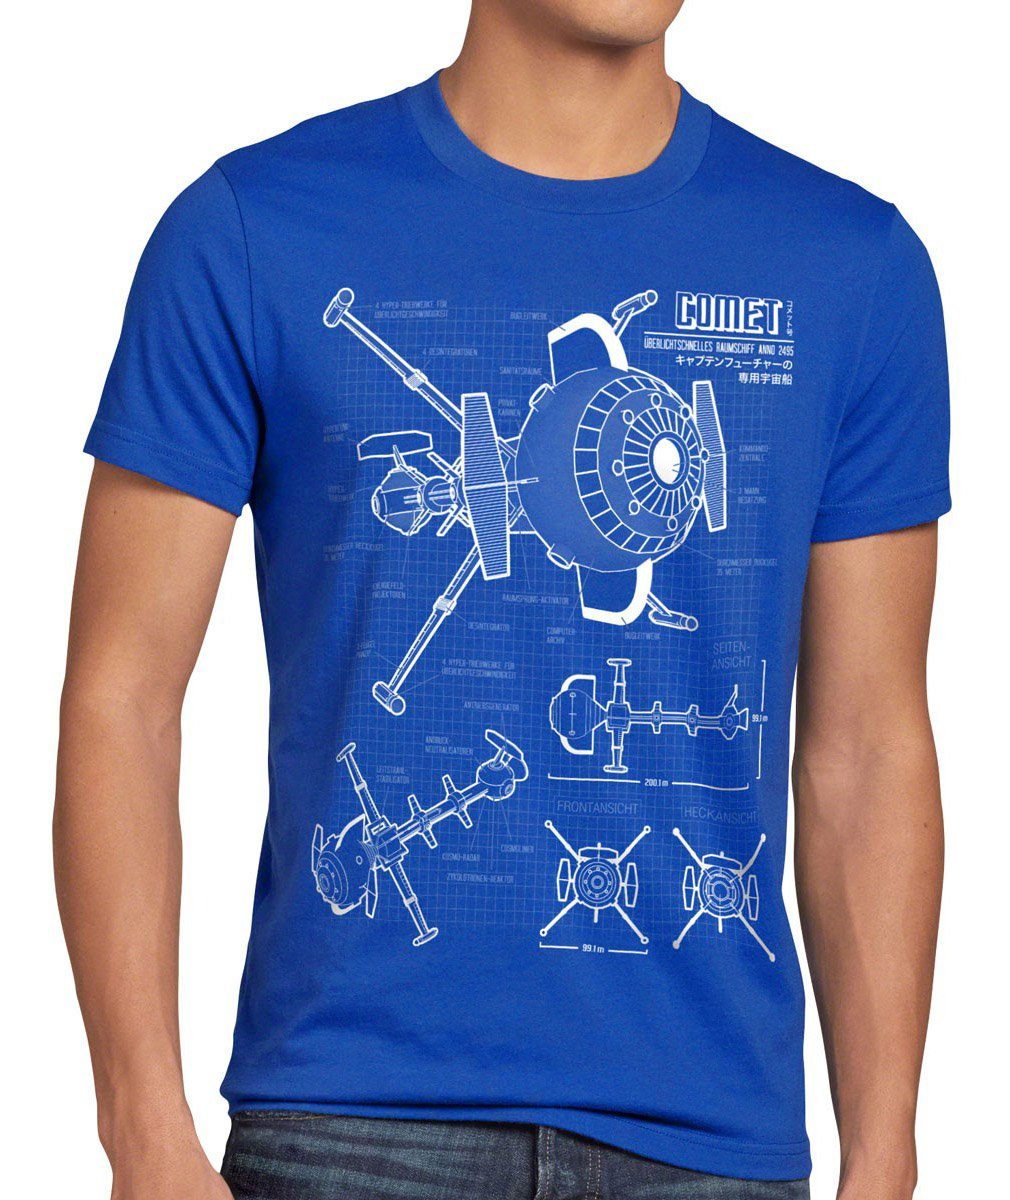 style3 Print-Shirt Herren T-Shirt Future Comet Captain Science Fiction Anime Comic Serie TV blu-ray blau